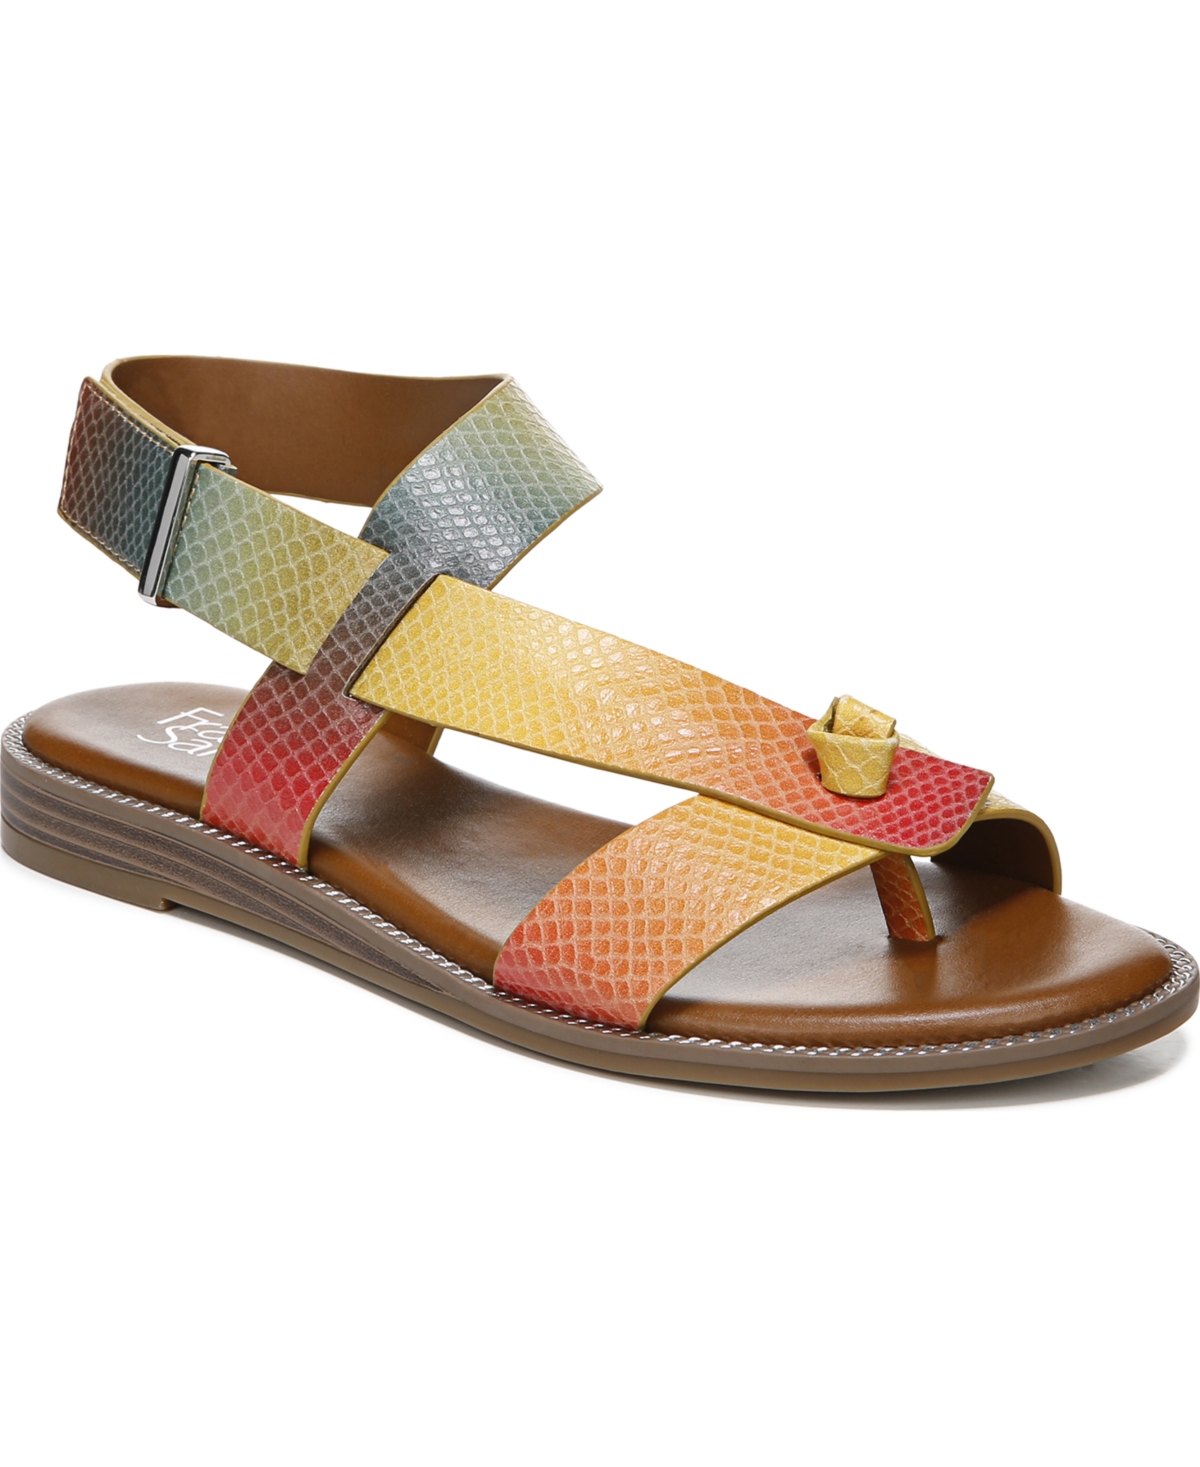 Glenni Hidden Adjustable Strap Flat Sandals - Rainbow Faux Leather